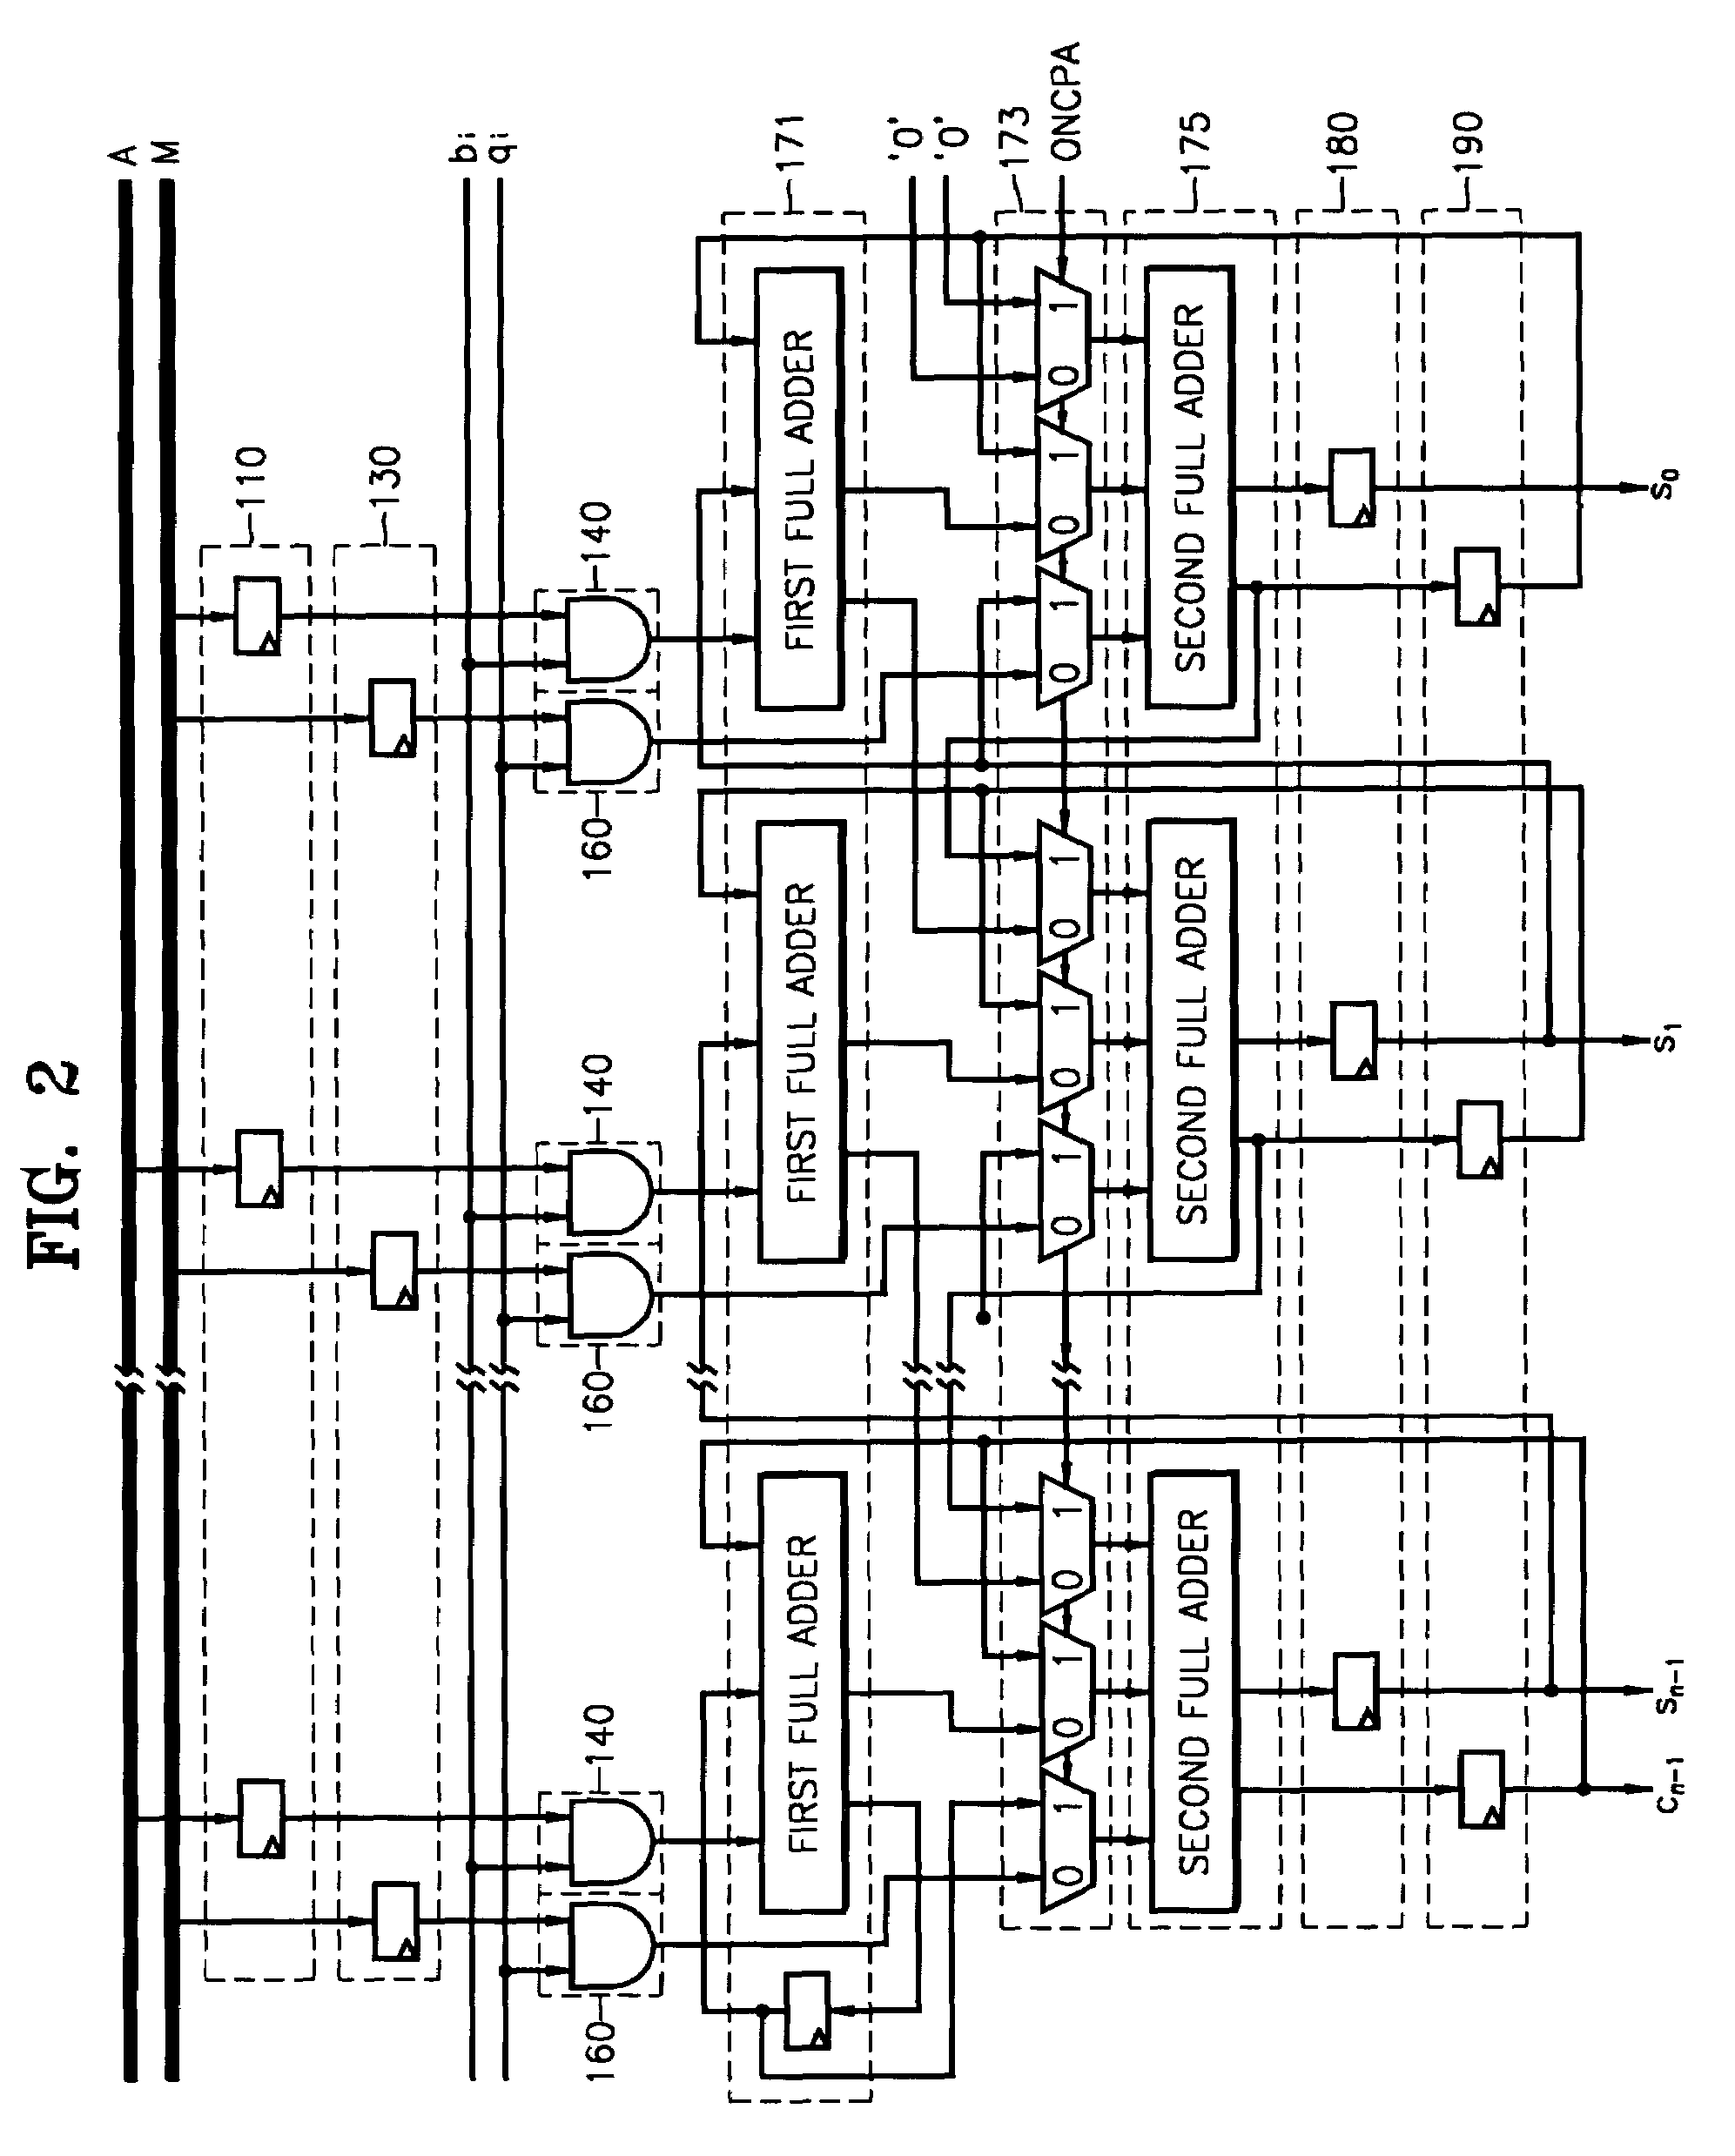 Montgomery modular multiplier using a compressor and multiplication method